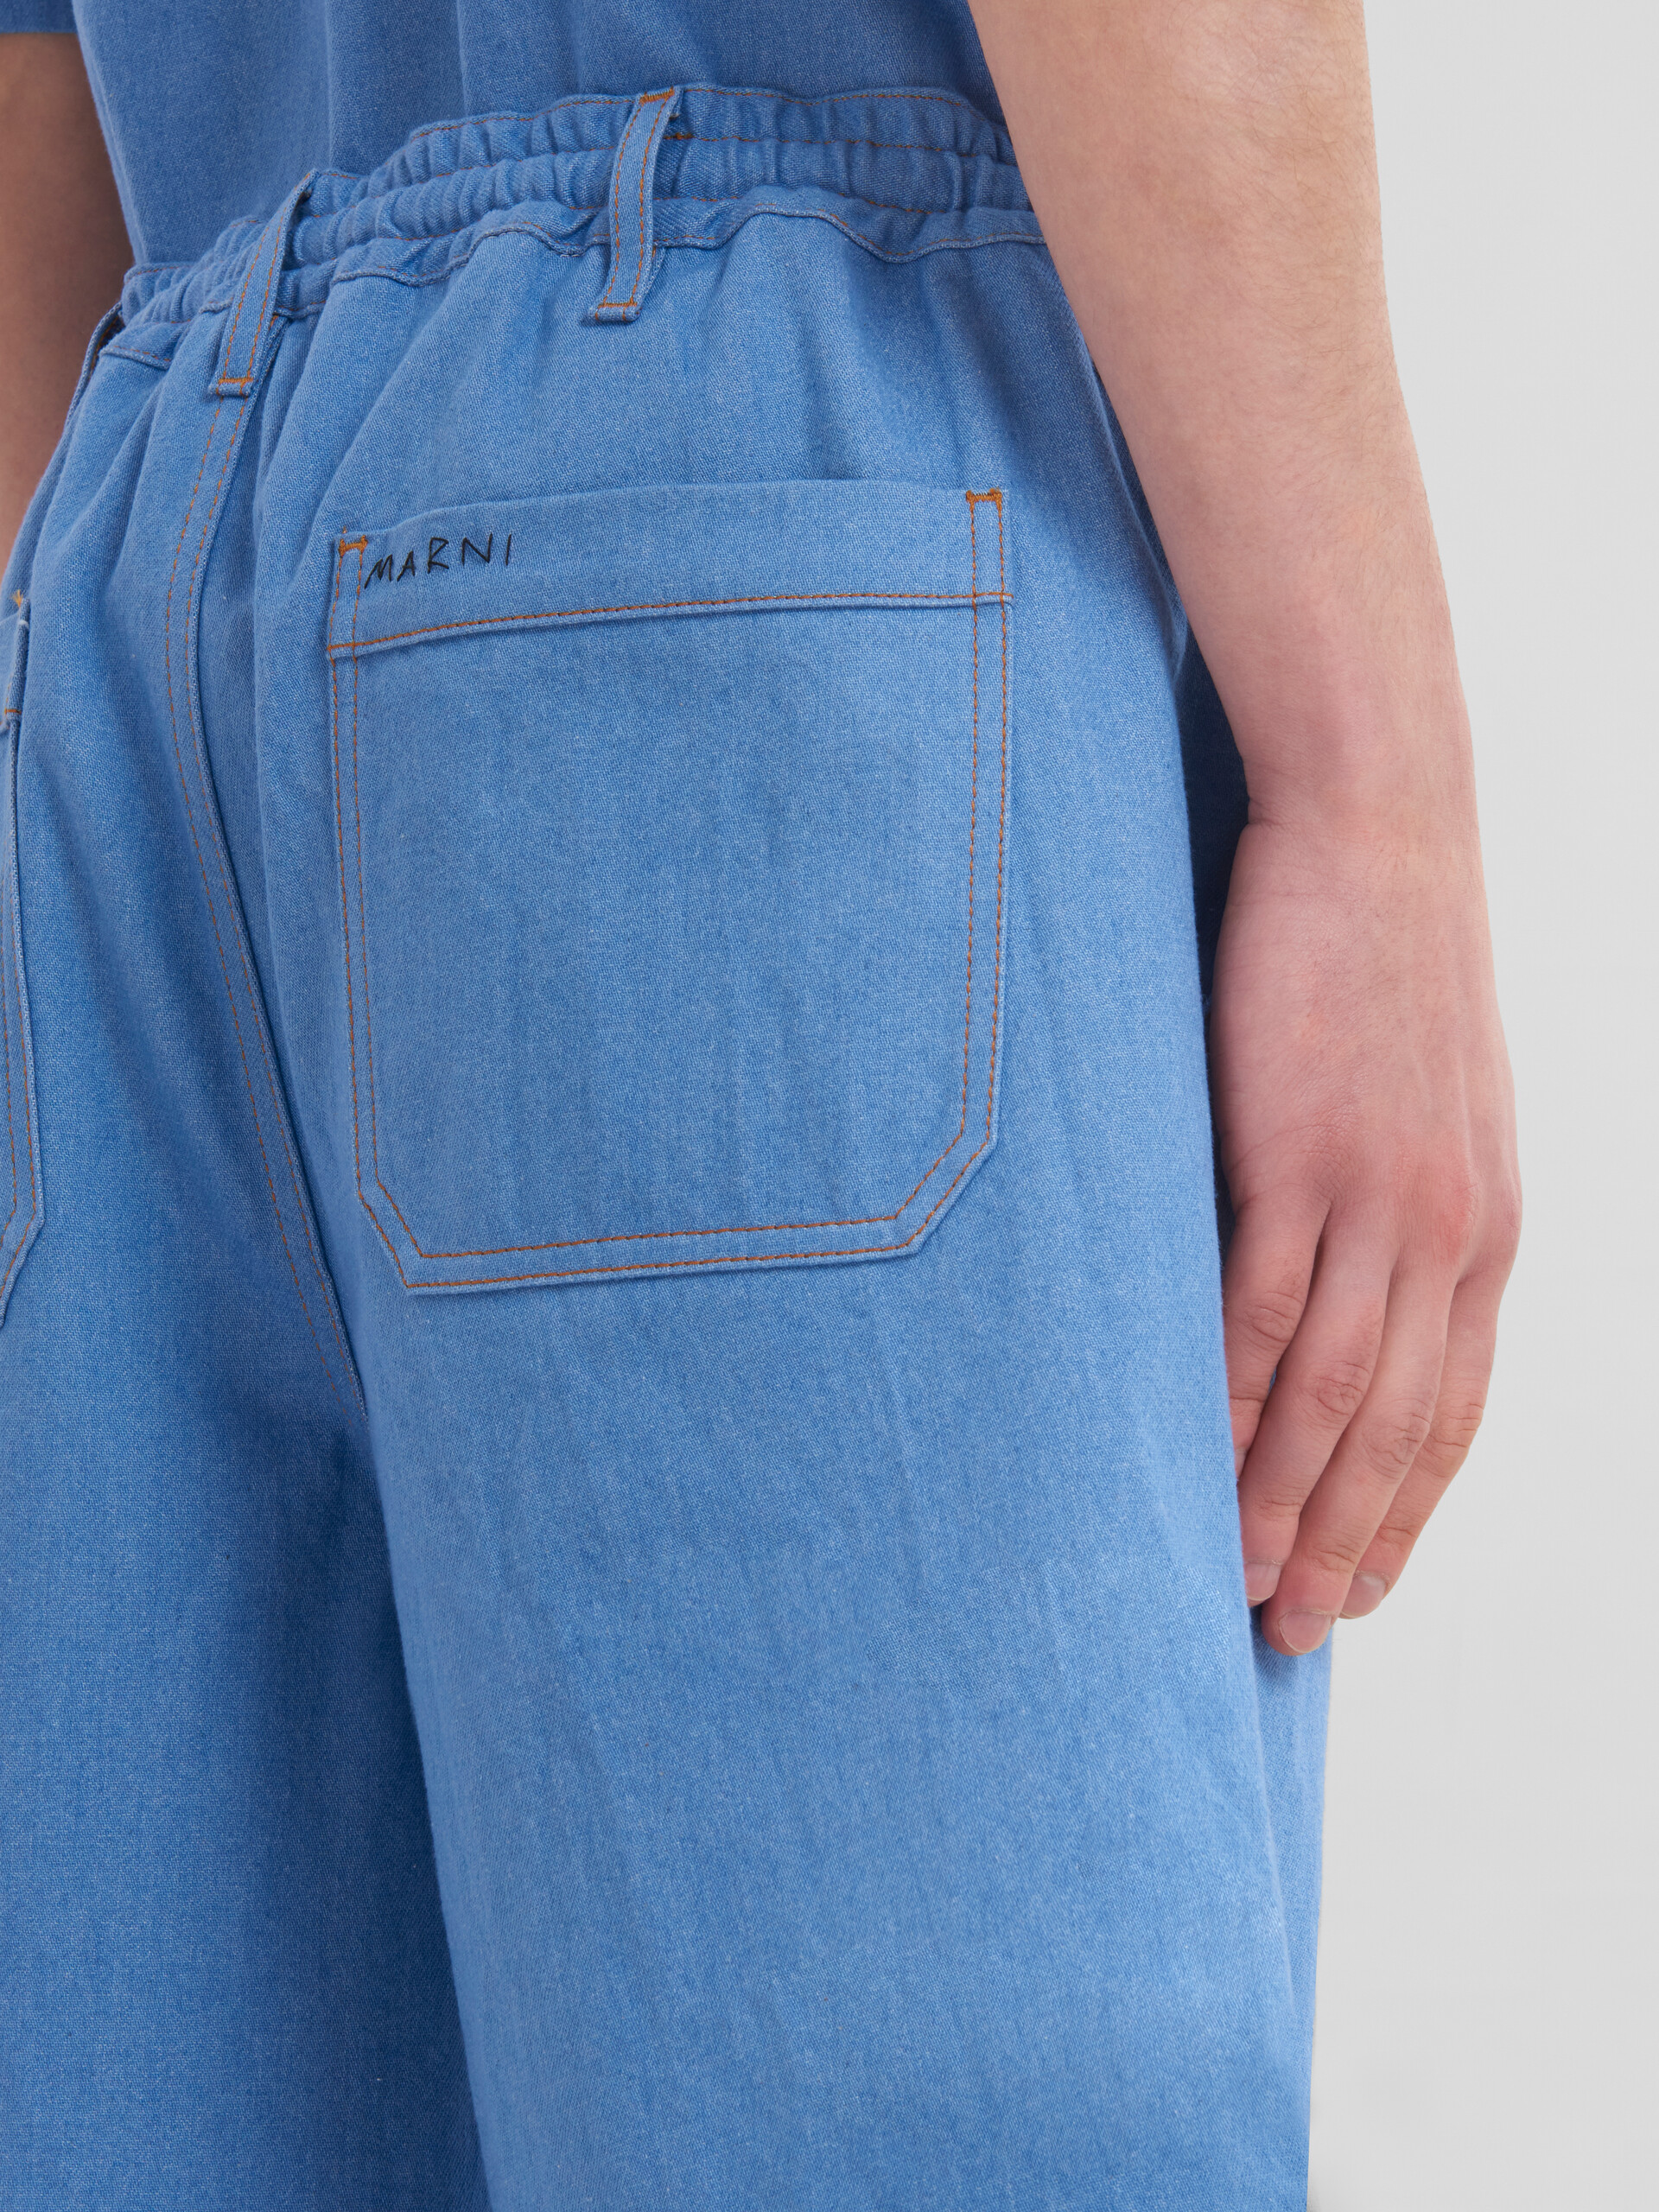 Blue denim boxer shorts - Pants - Image 4